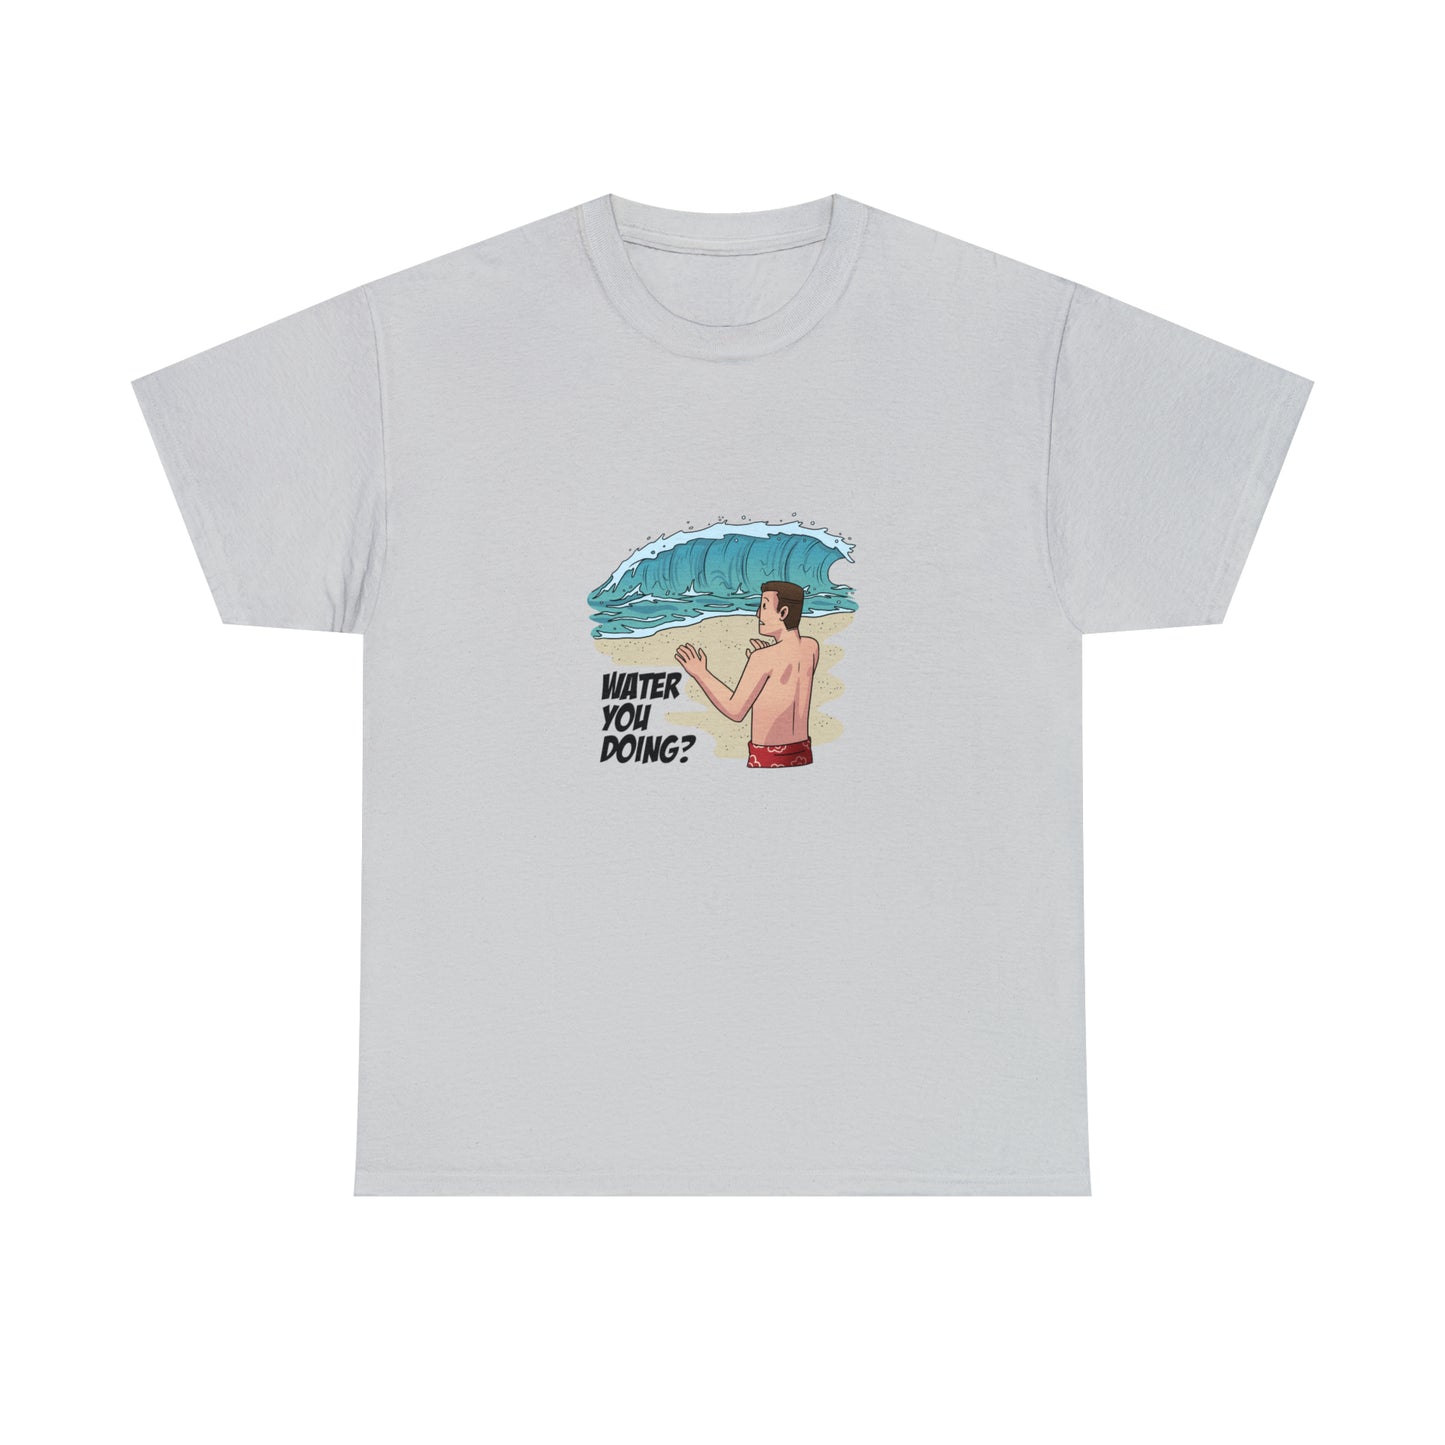 Custom Parody T-shirt, WATER you doing? design